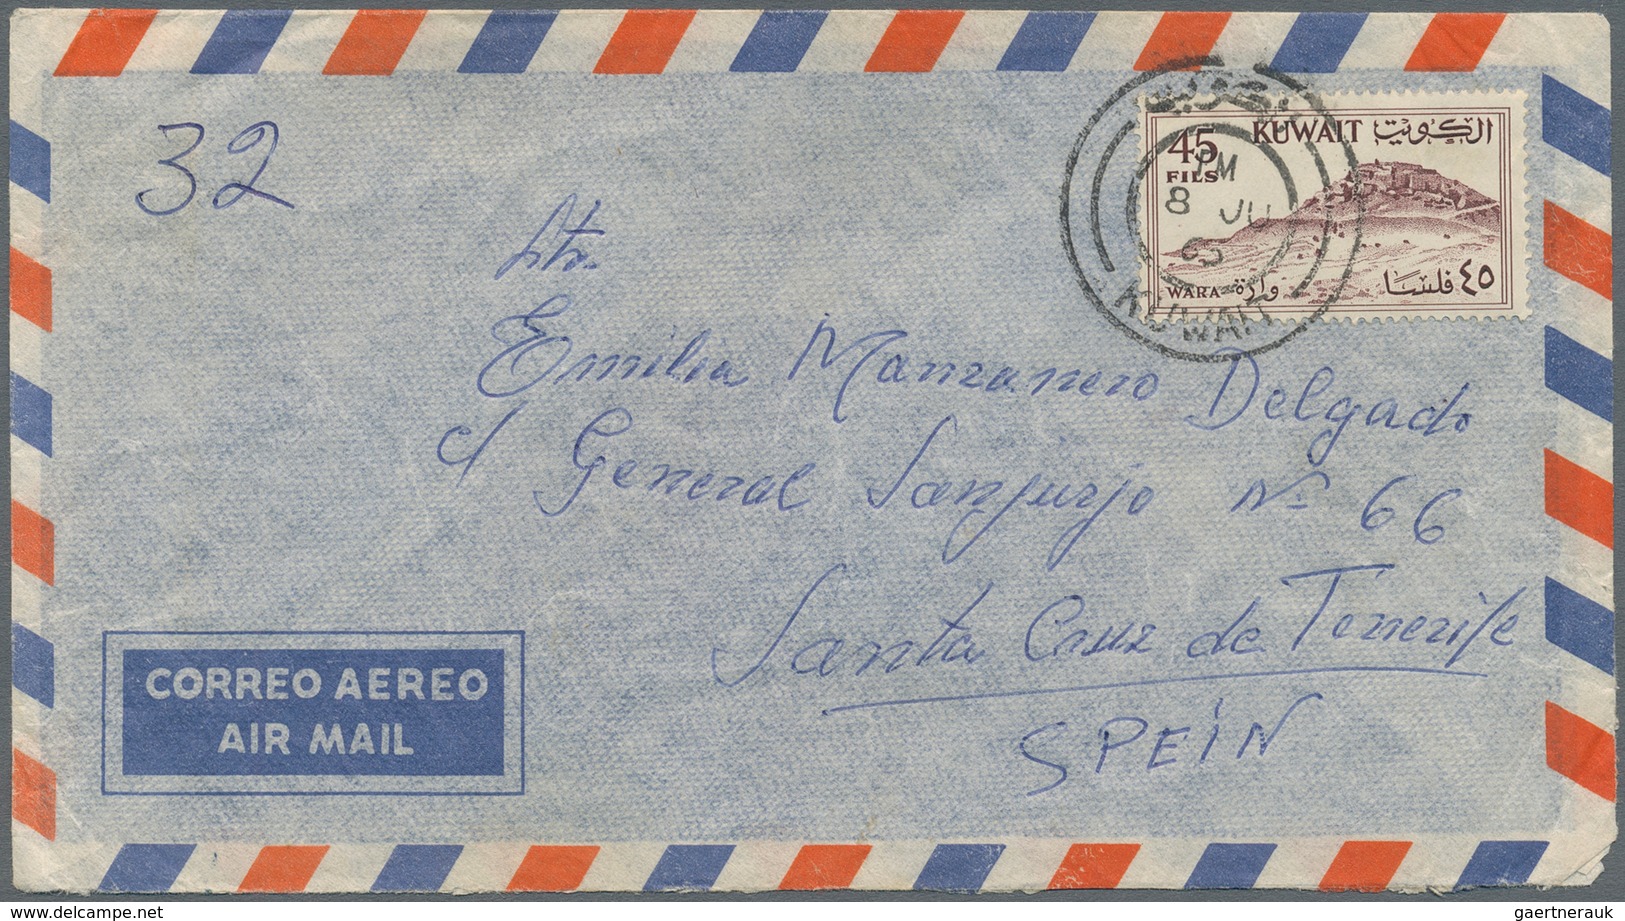 Kuwait: 1965, Airmail Letter From "KUWAIT 8 JU 65" To Teneriffa, Canarian Islands. On Reverse Blue C - Kuwait